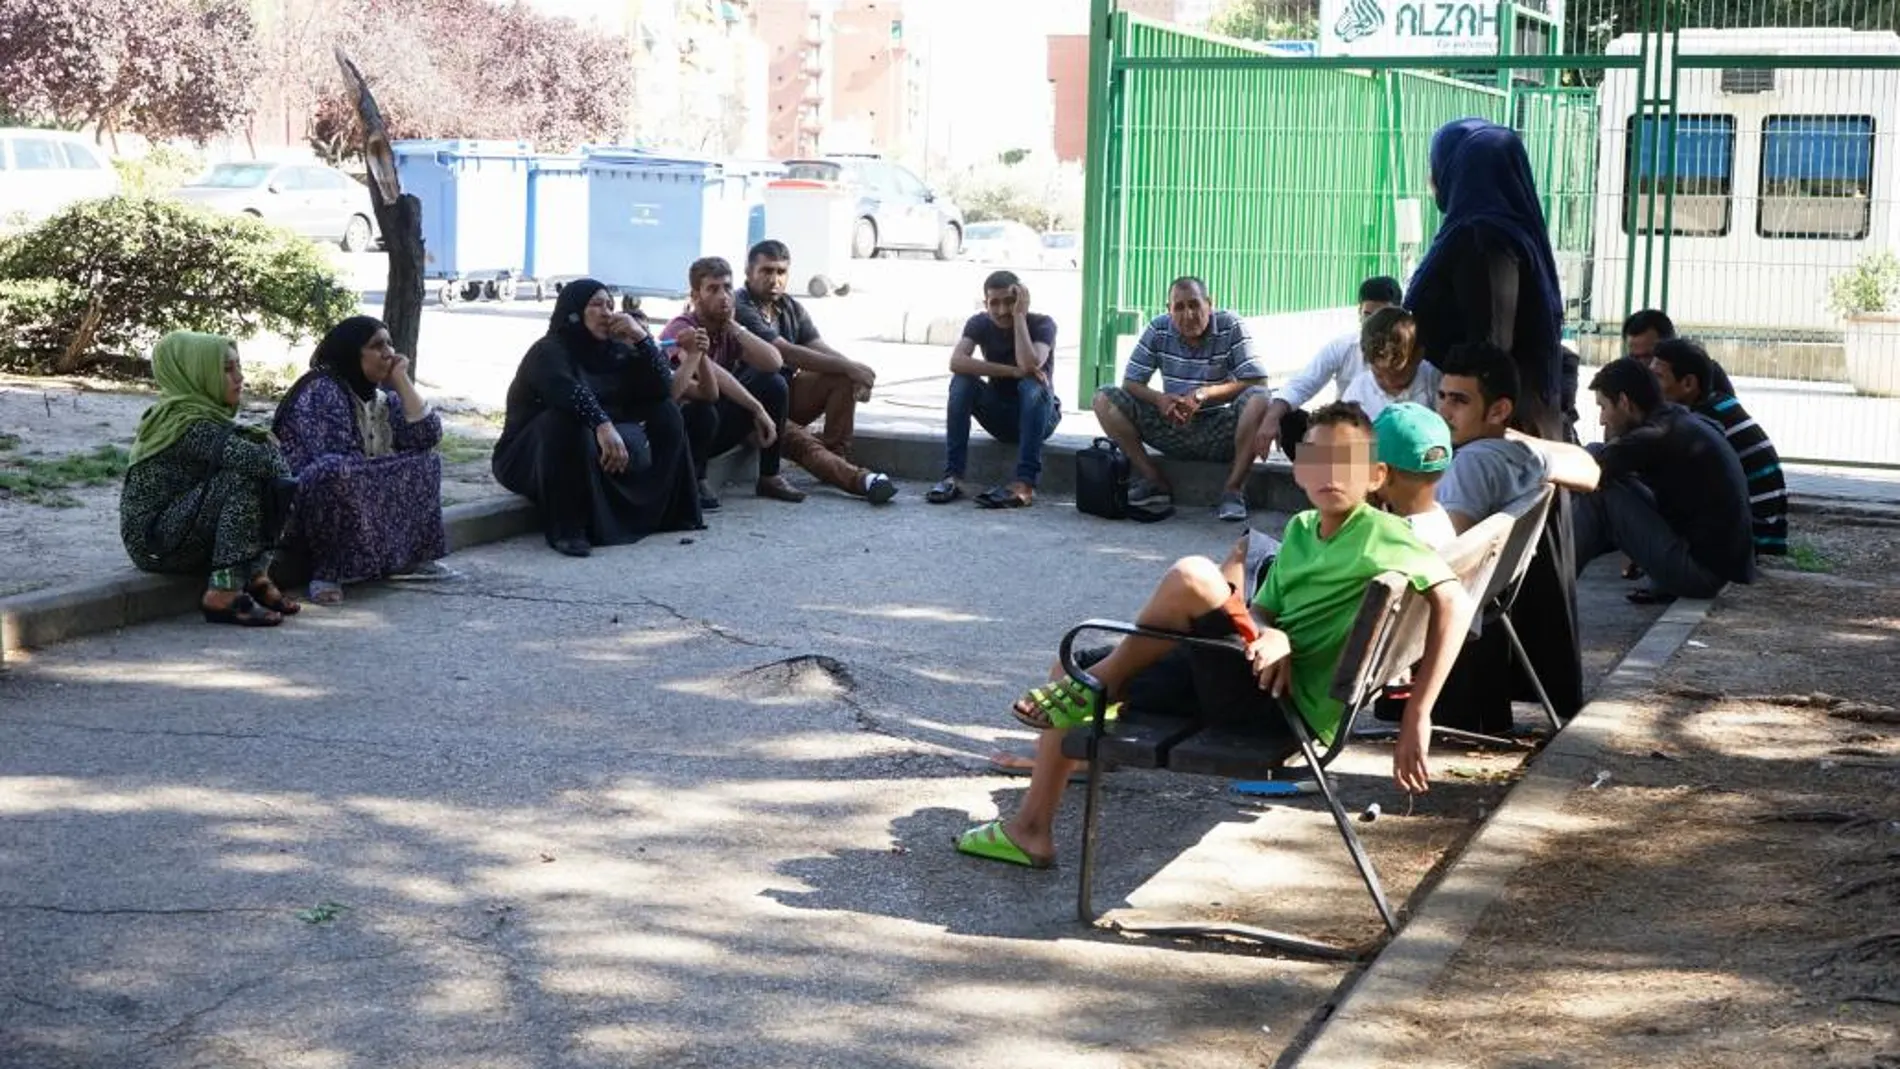 Refugiados Sirios en Madrid.